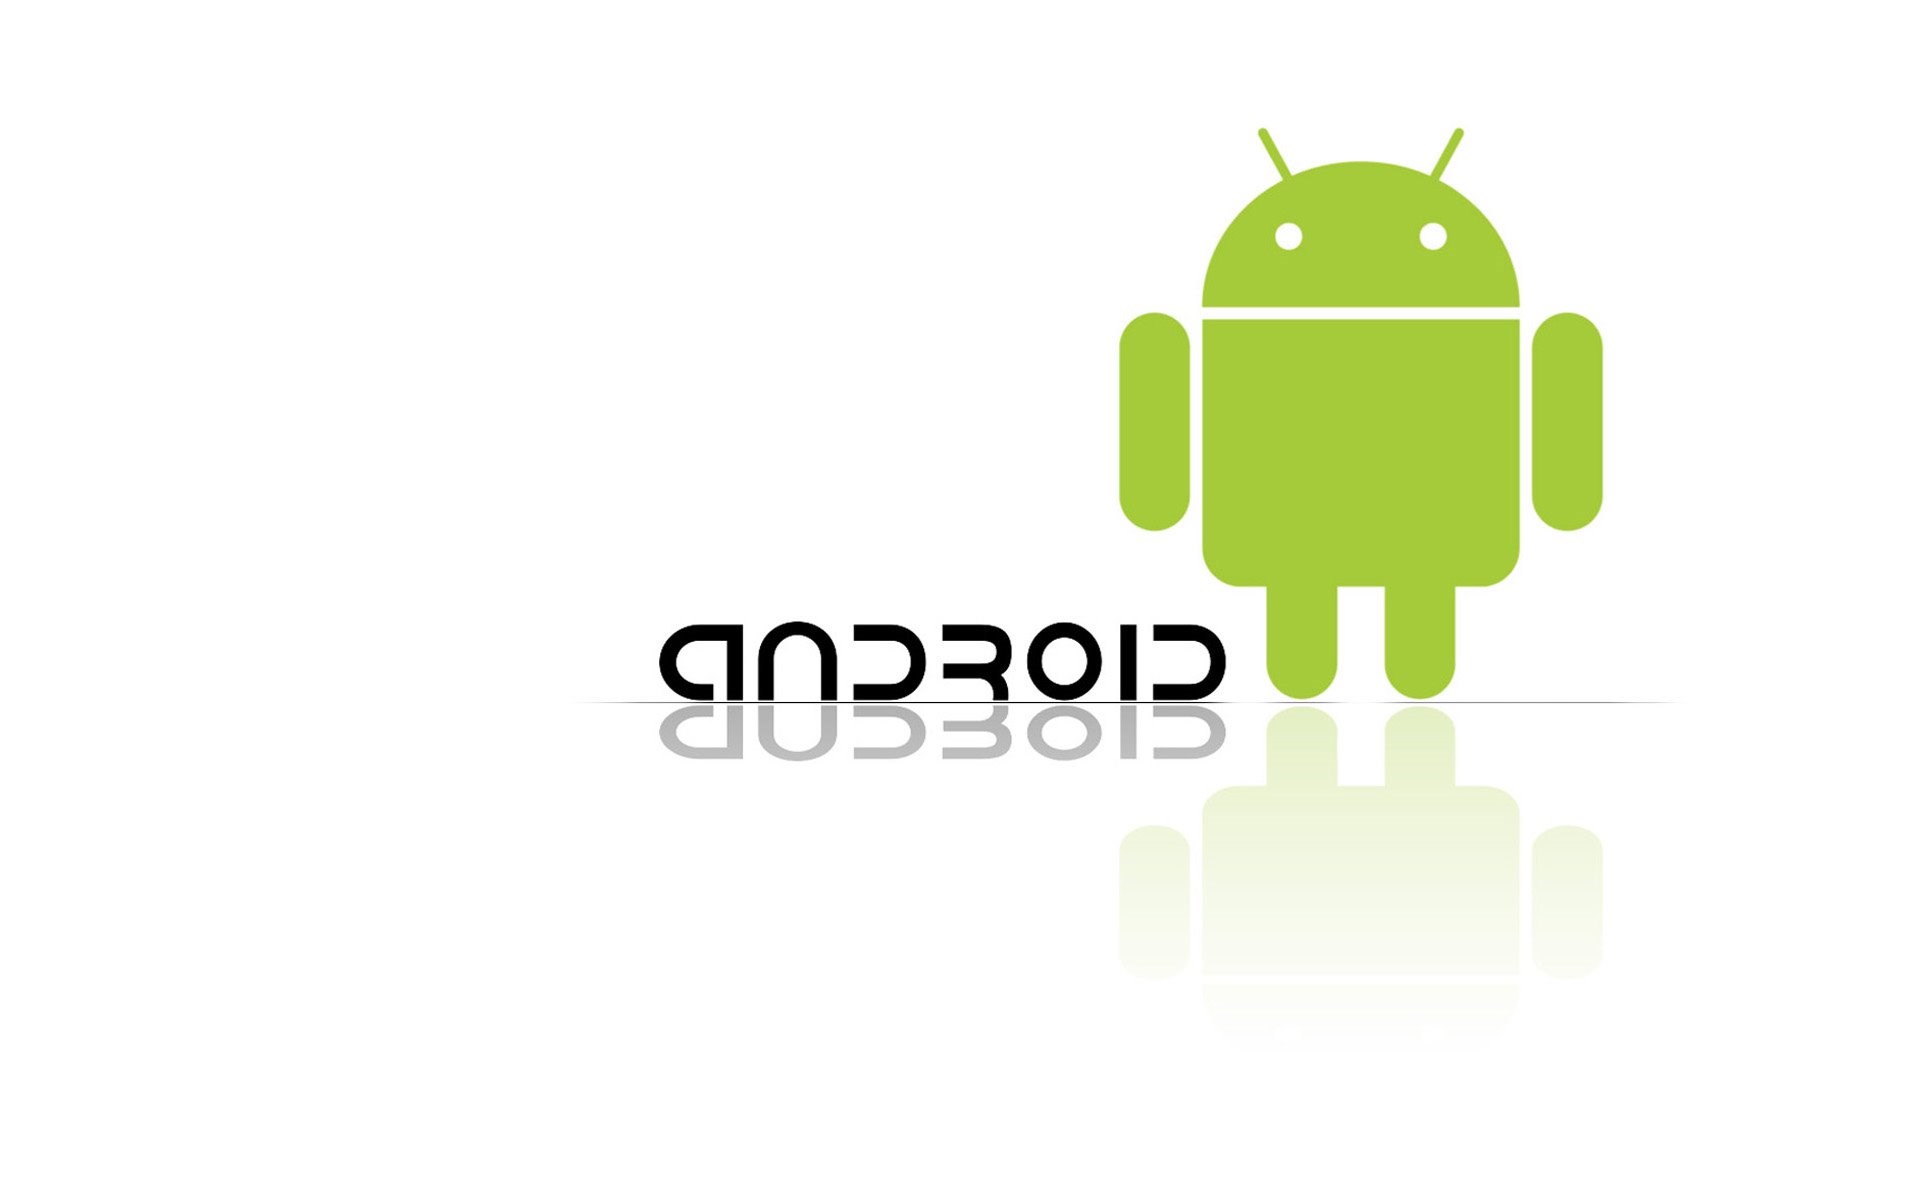 Андроид logo